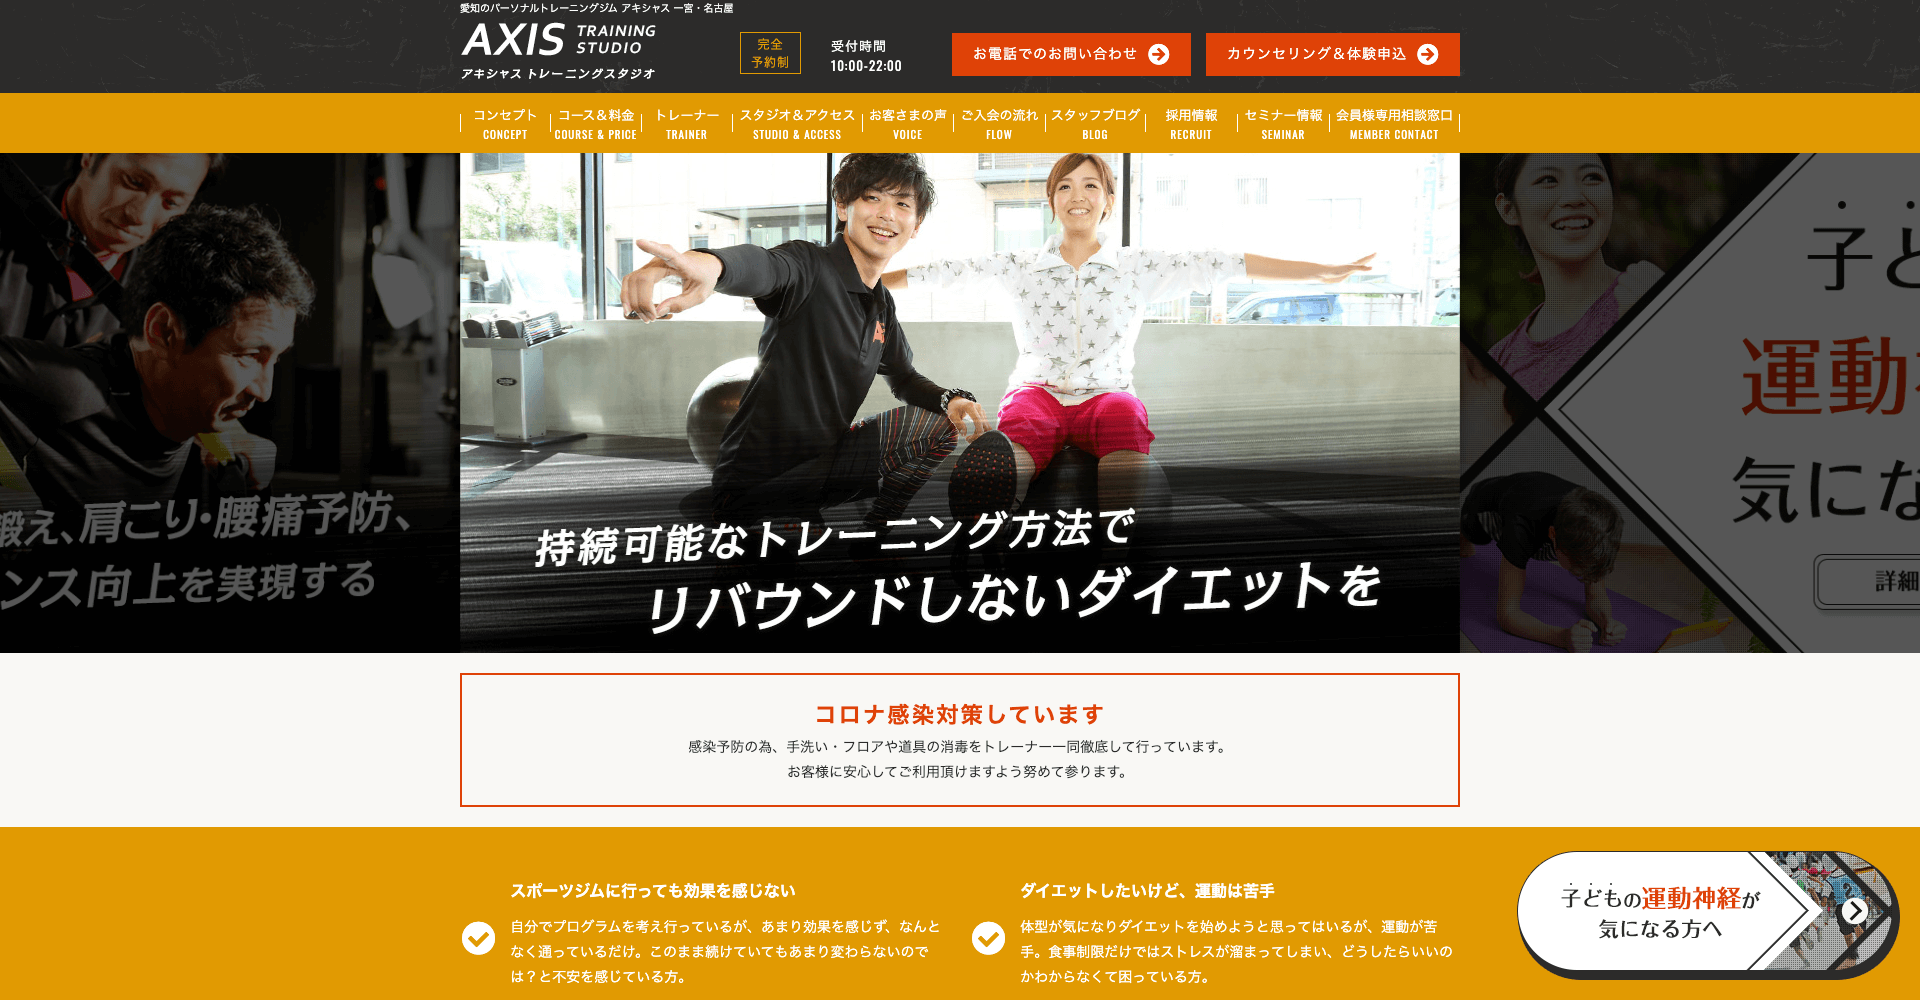 AXIS TRANING STUDIO 名古屋栄 松原店 パーソナルトレーニングジム